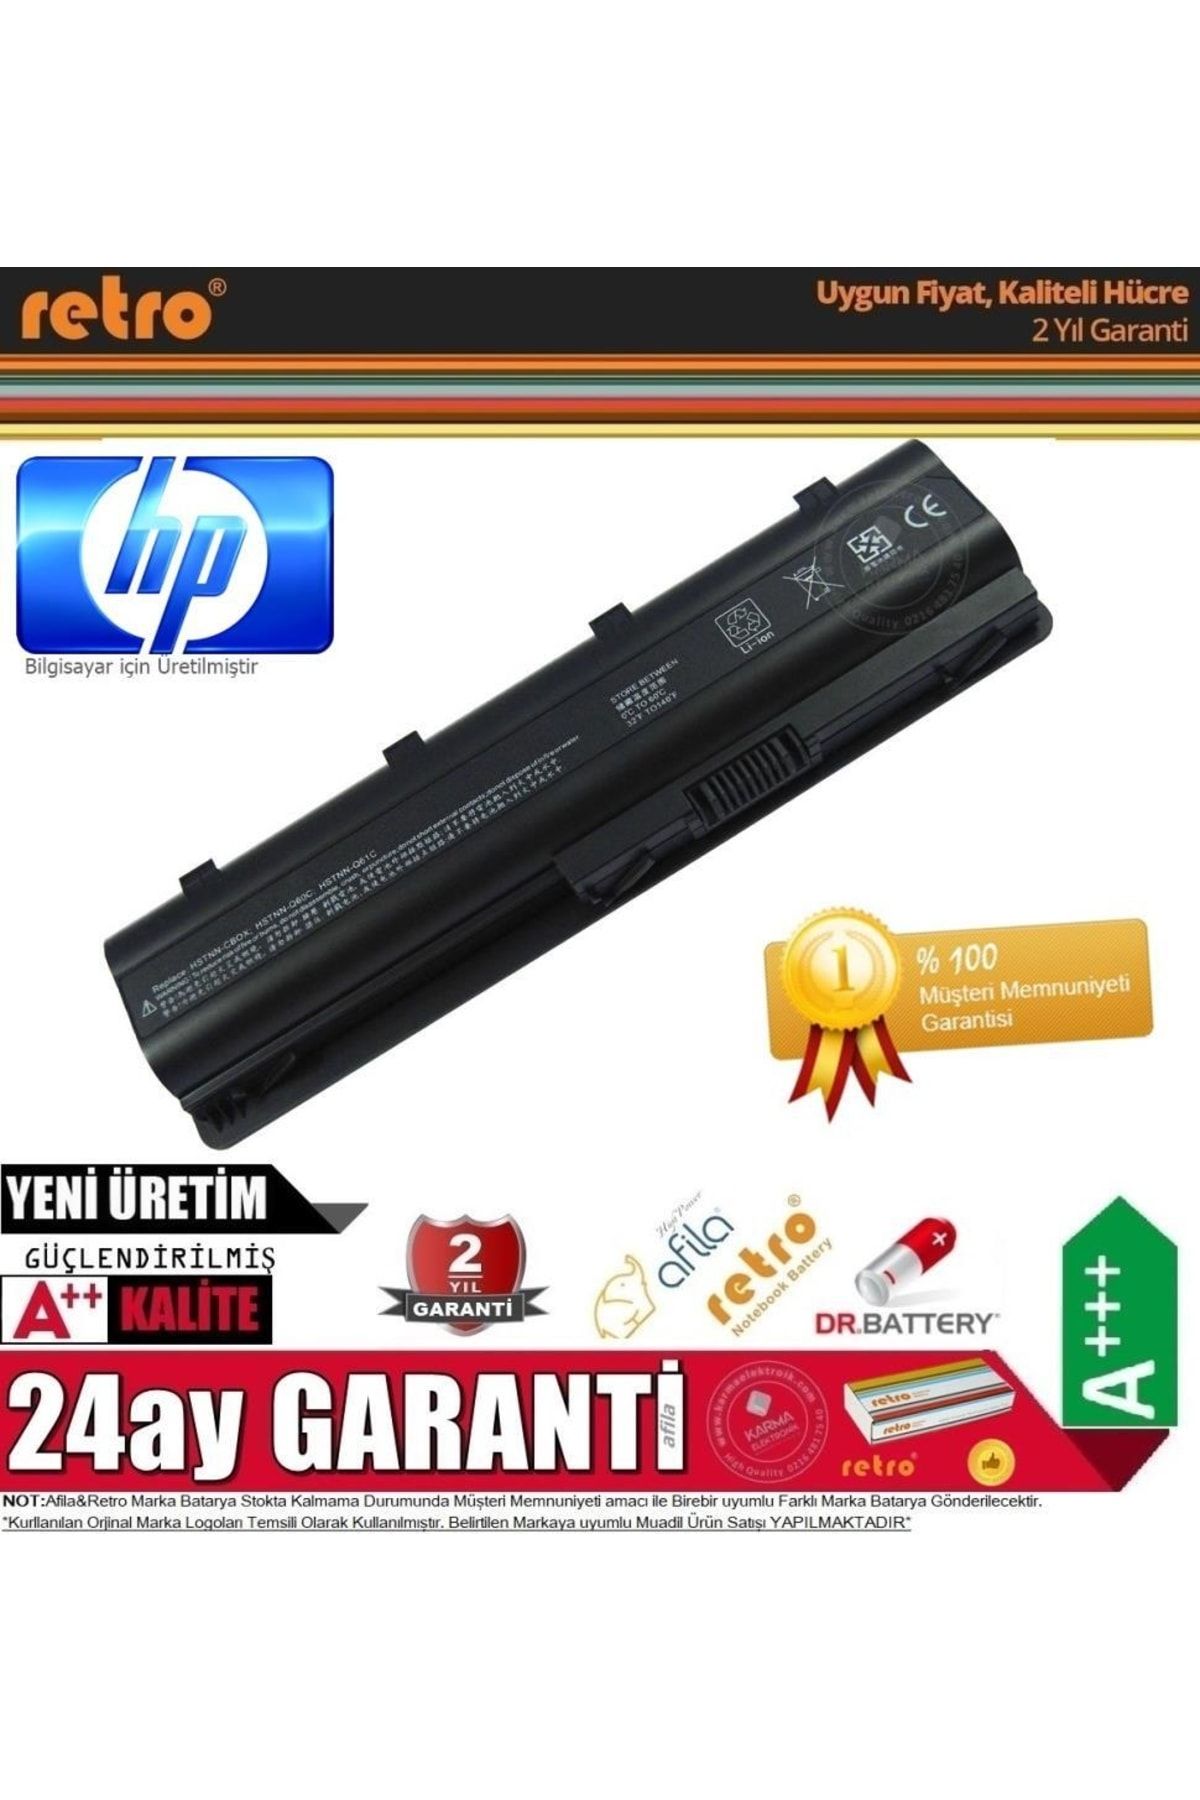 HP Mu06, G56, G62, Cq42, G6-1000 Notebook Bataryası - Pili 6cell / Rcl-040**